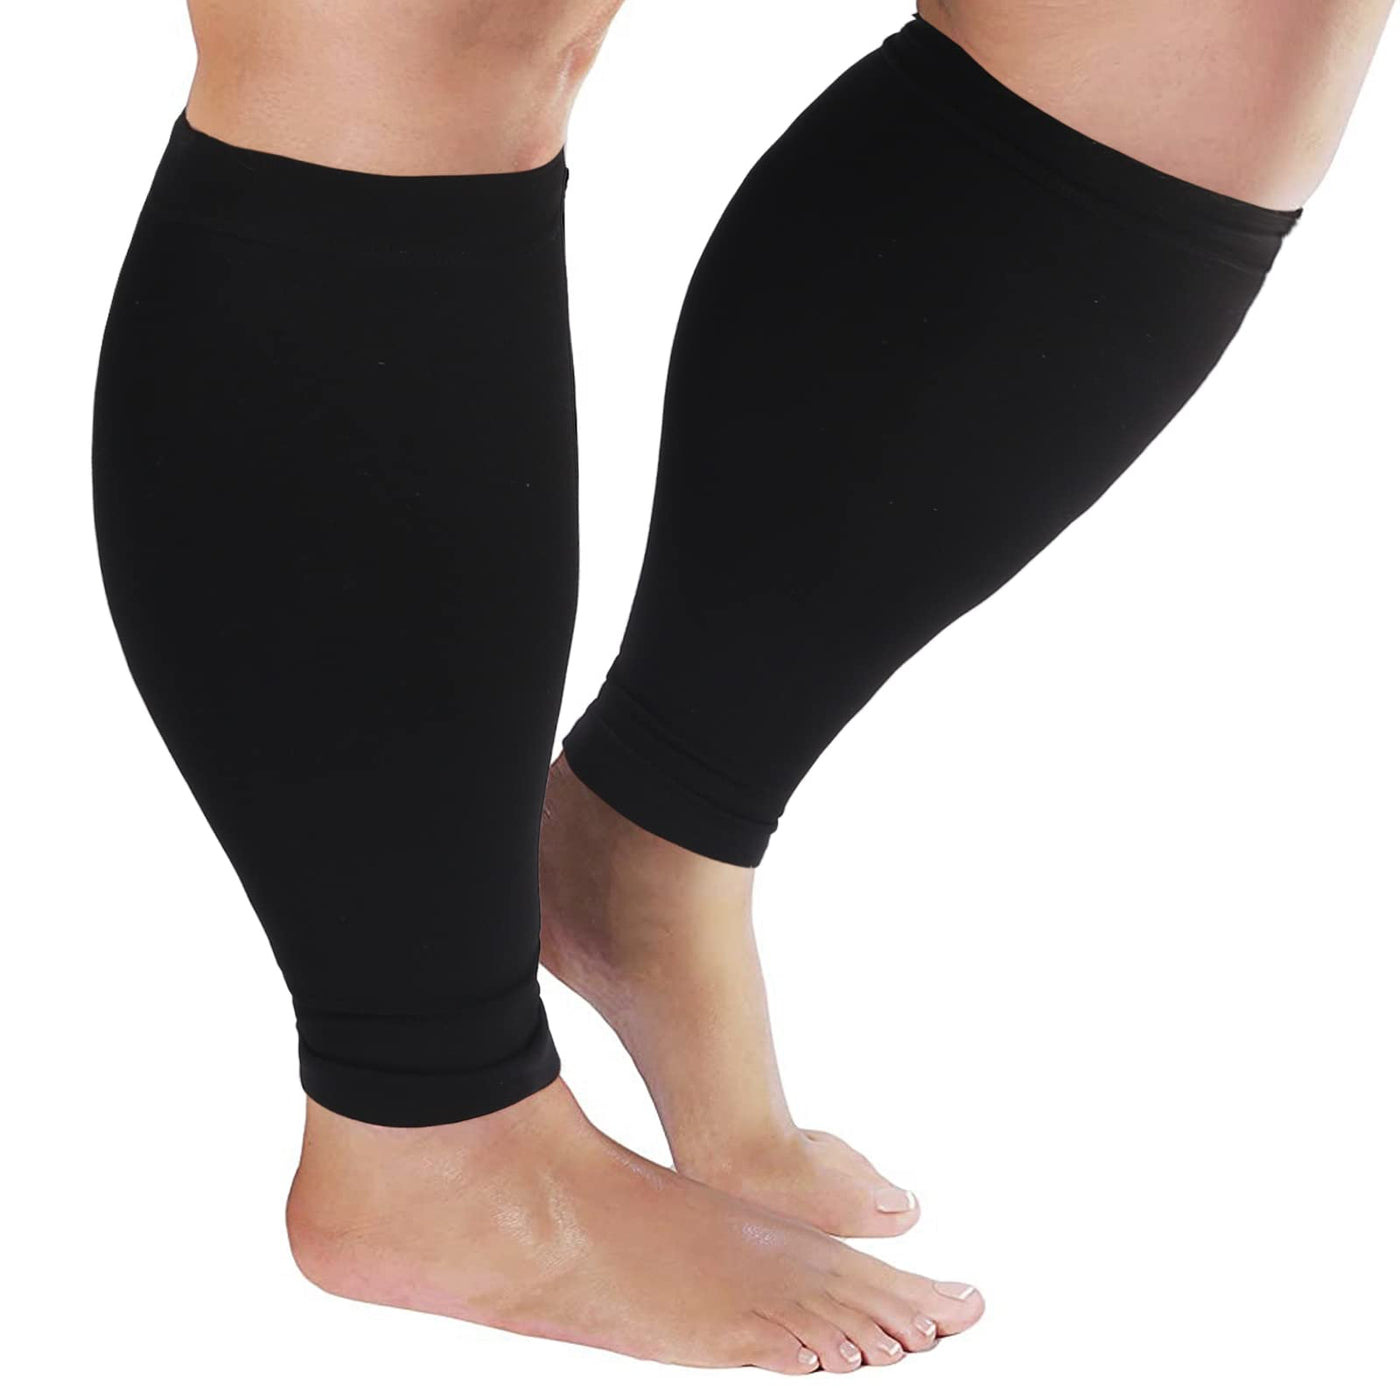 Buy CompressionZ Compression Socks 20-30 mmHG for Men & Women